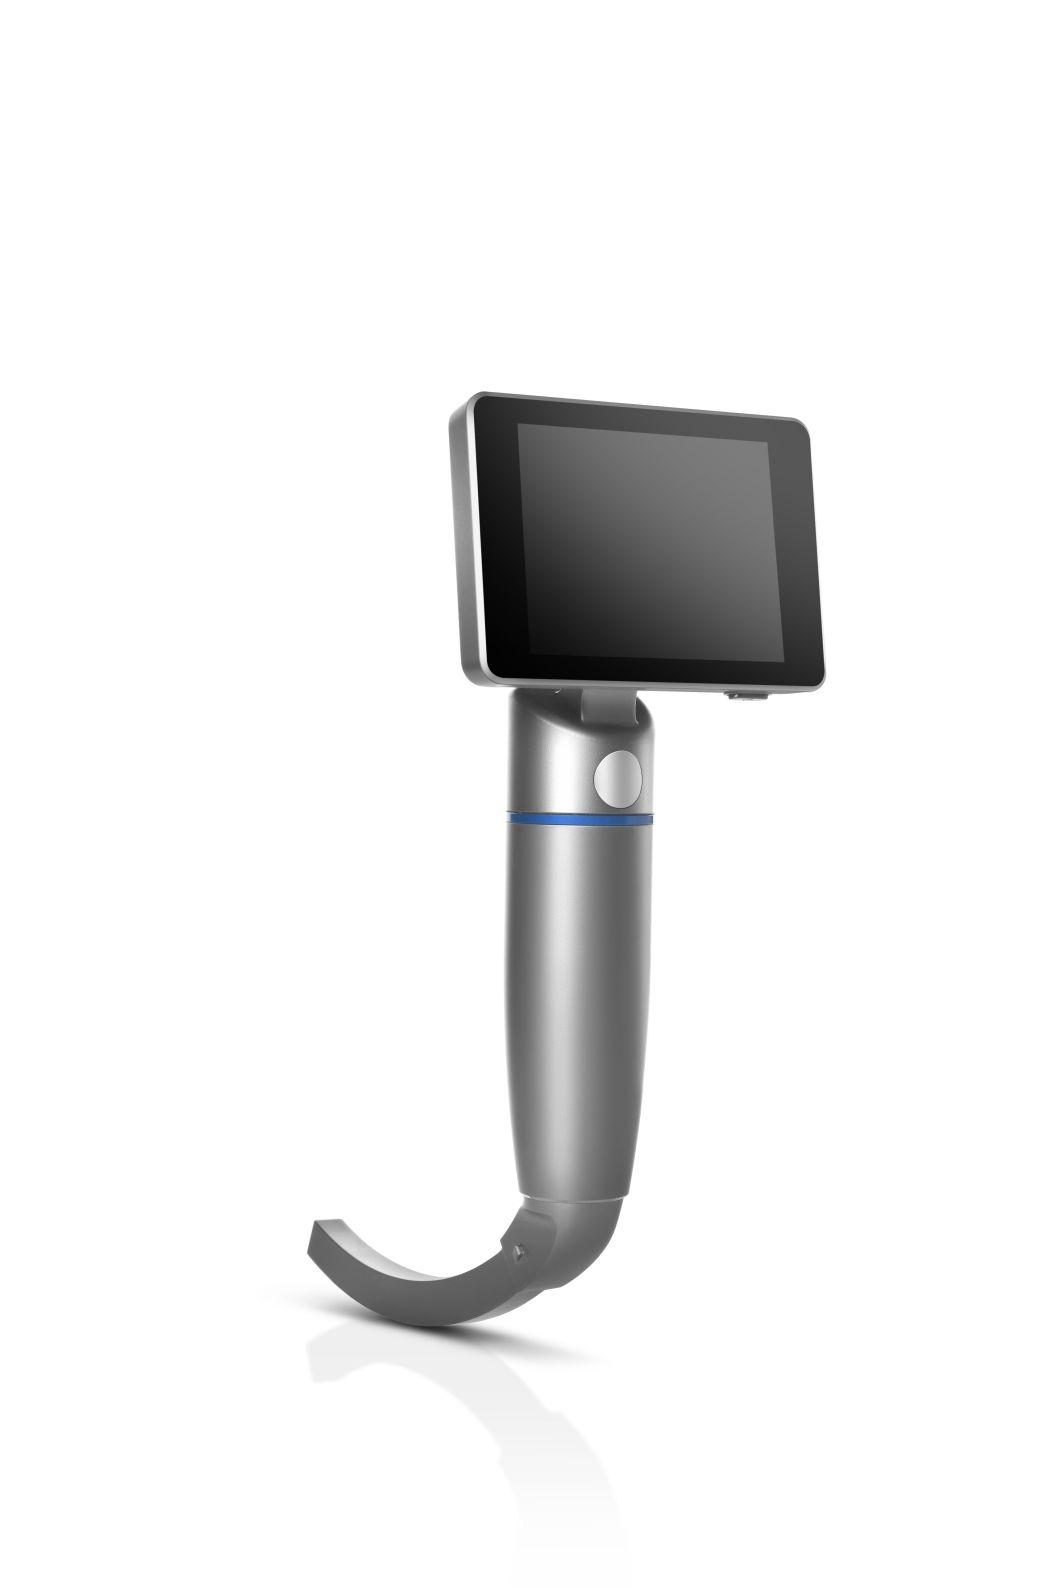 Hisern Medical 3-Inch HD Monitor Anesthesia Video Laryngoscope